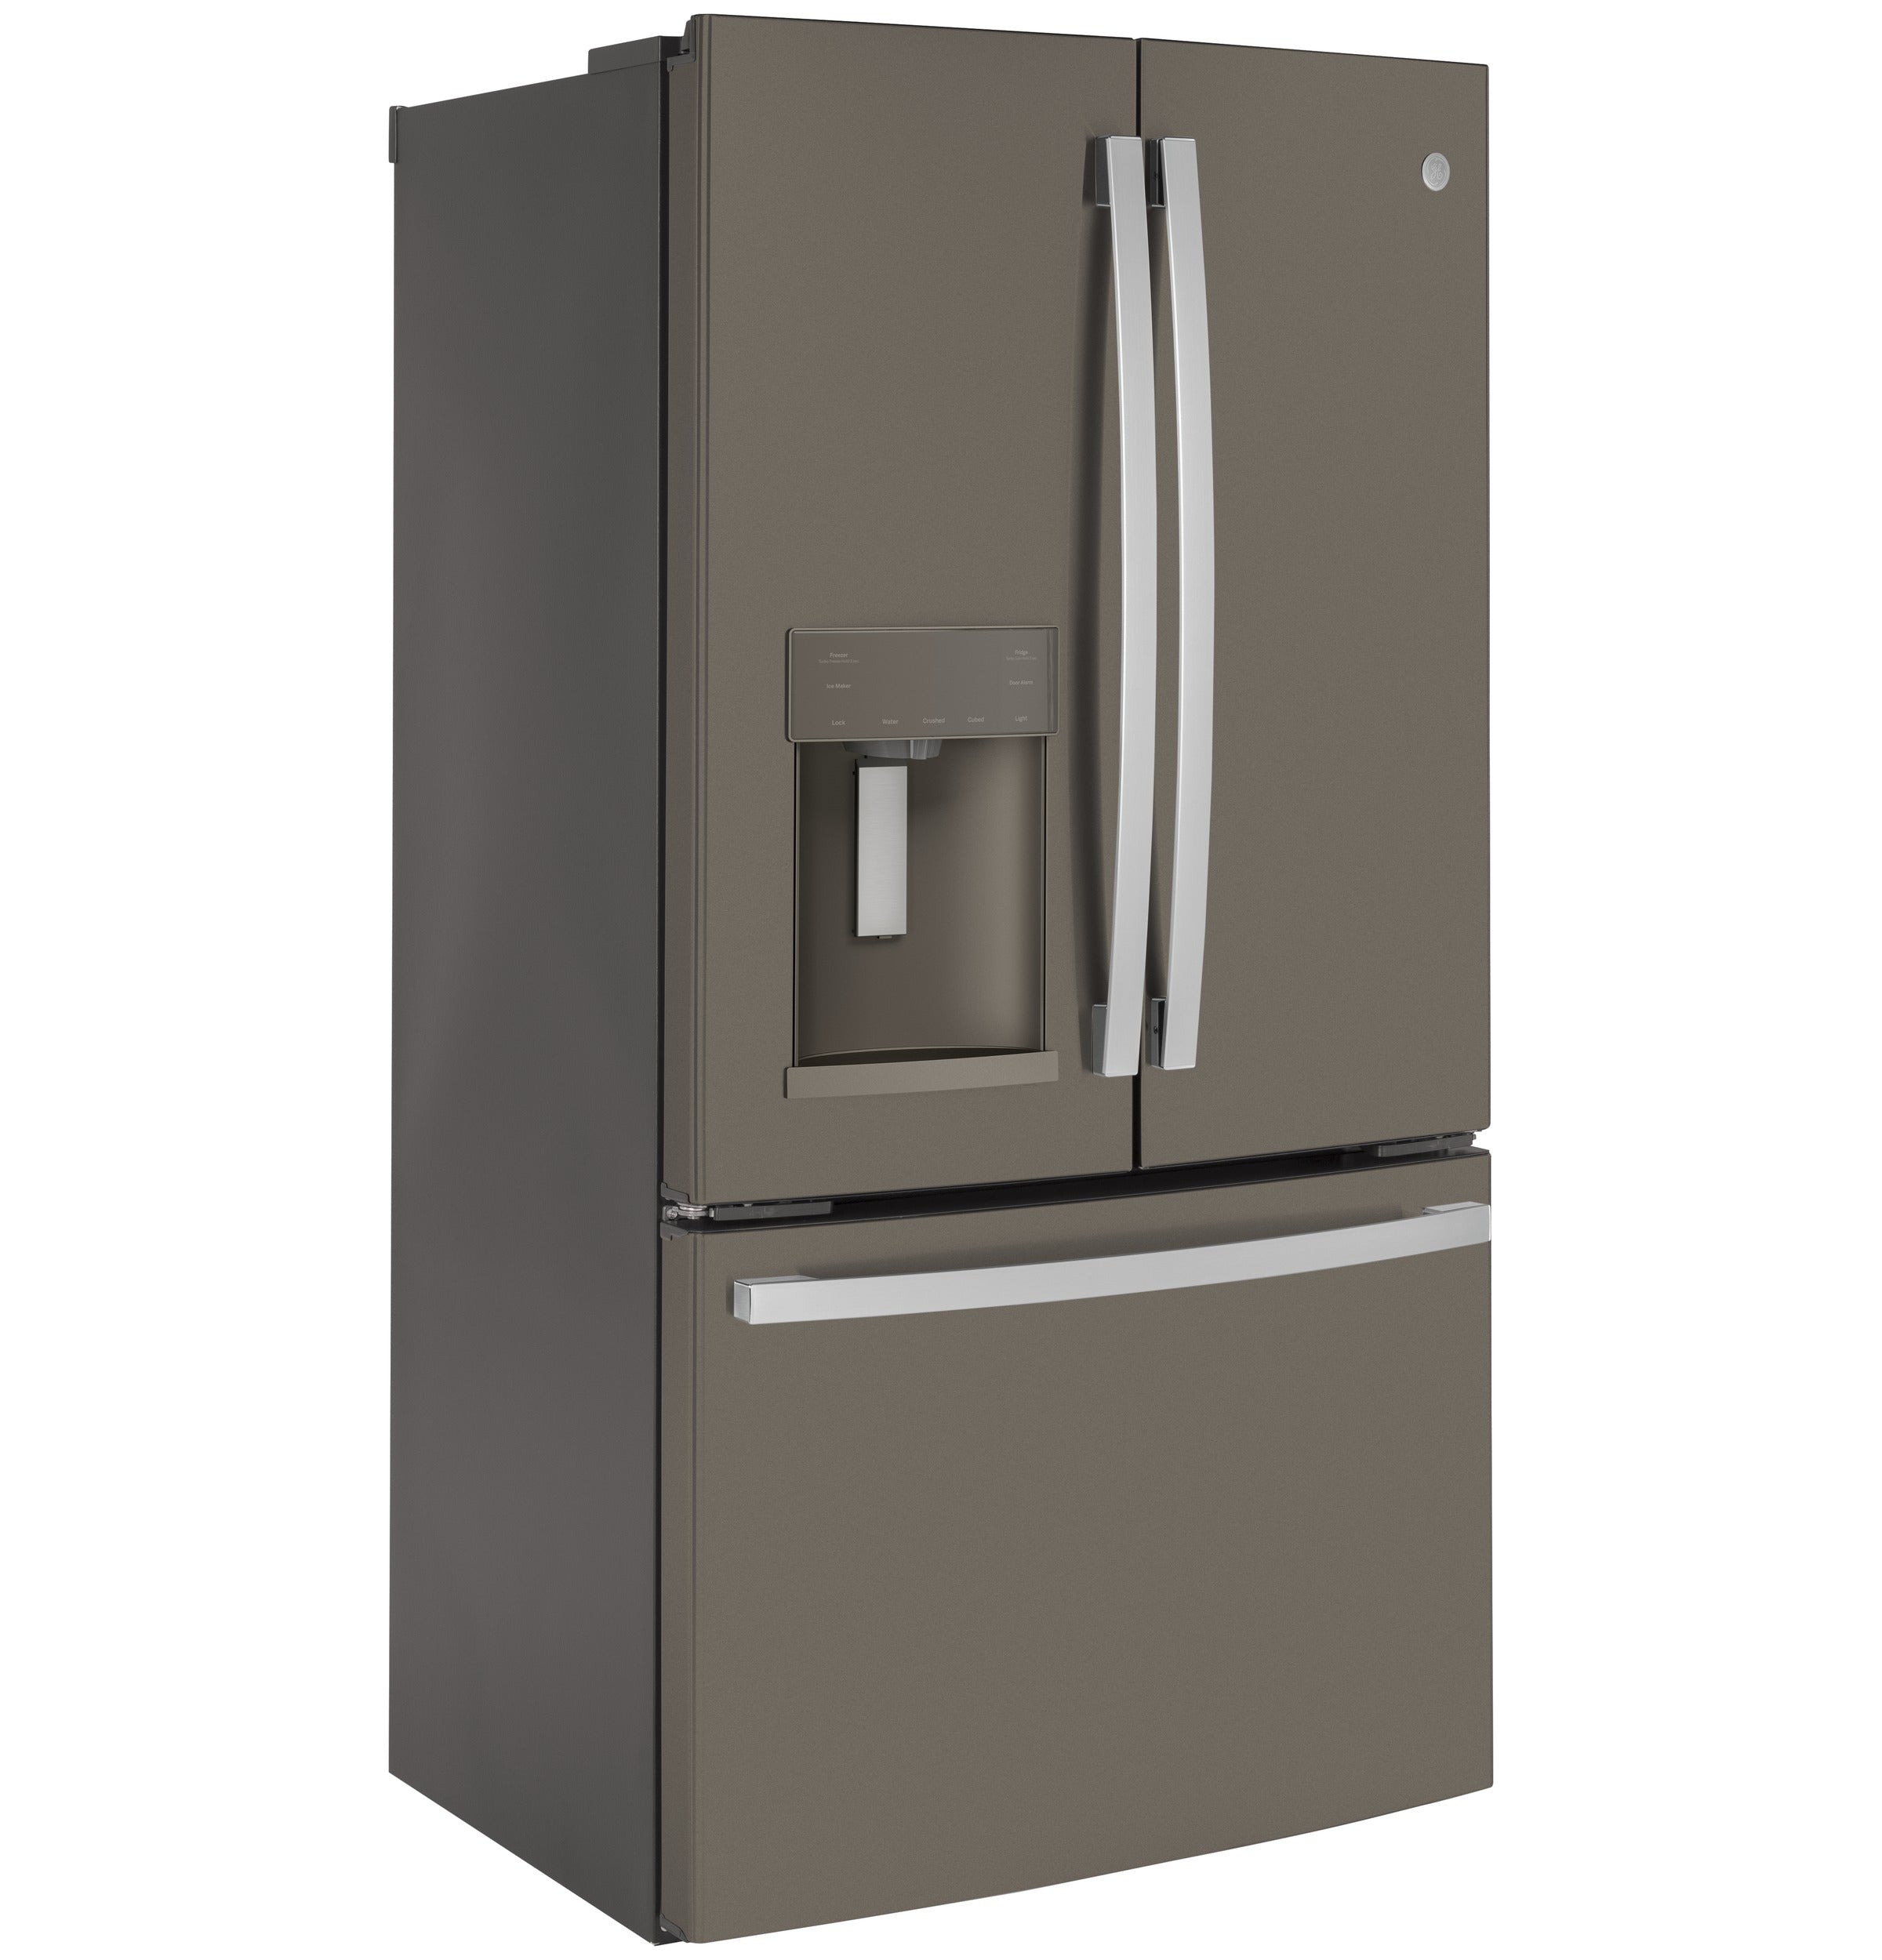 GE - 35.75 Inch 22.1 cu. ft French Door Refrigerator in Slate - GYE22GMNES